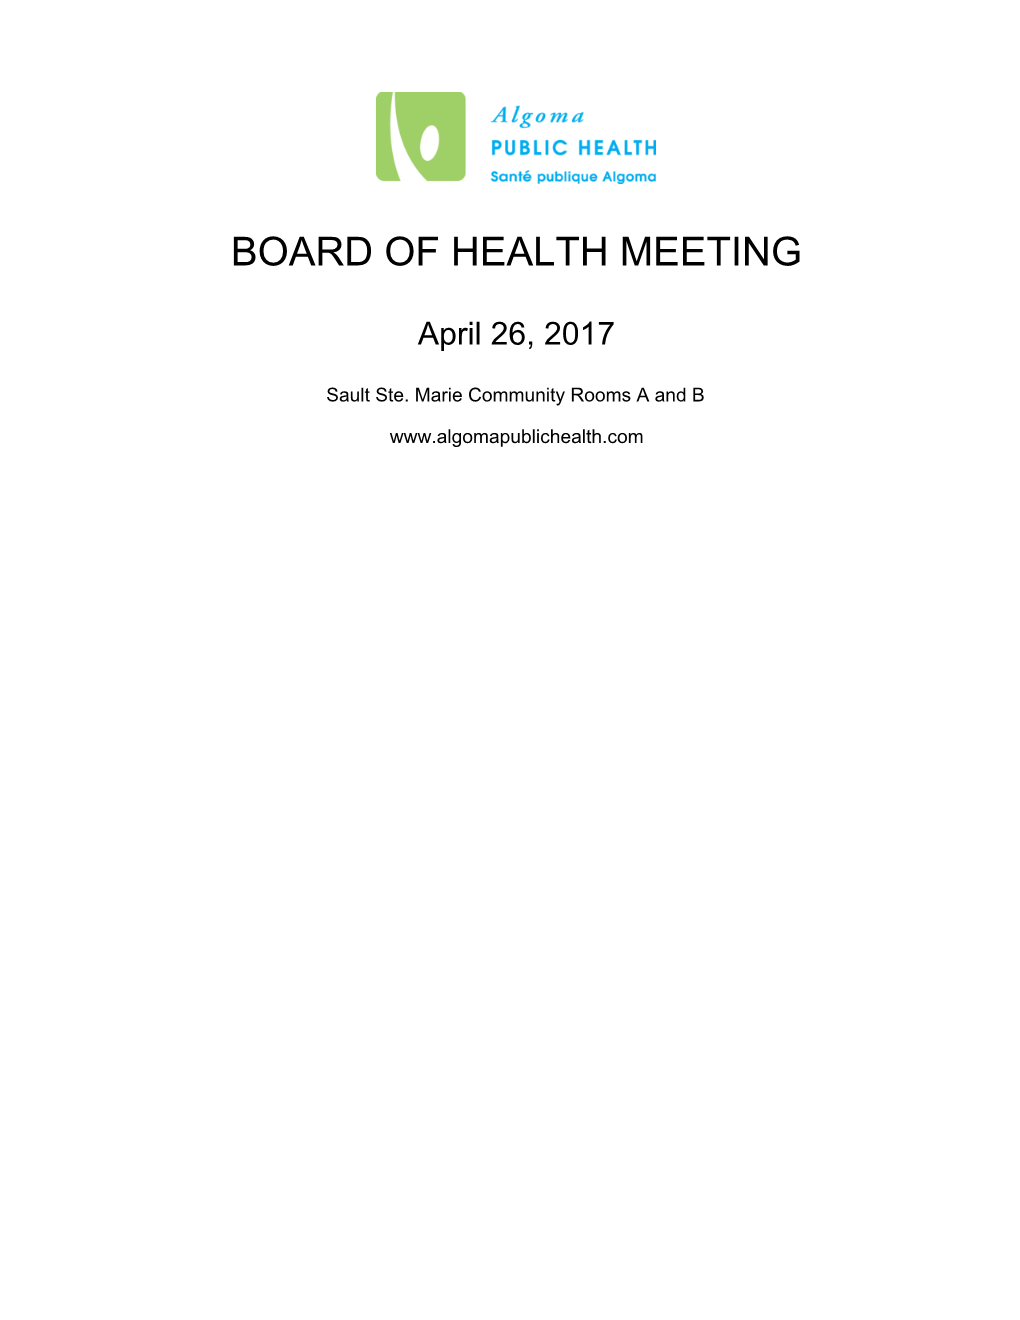 Board of Health Meeting